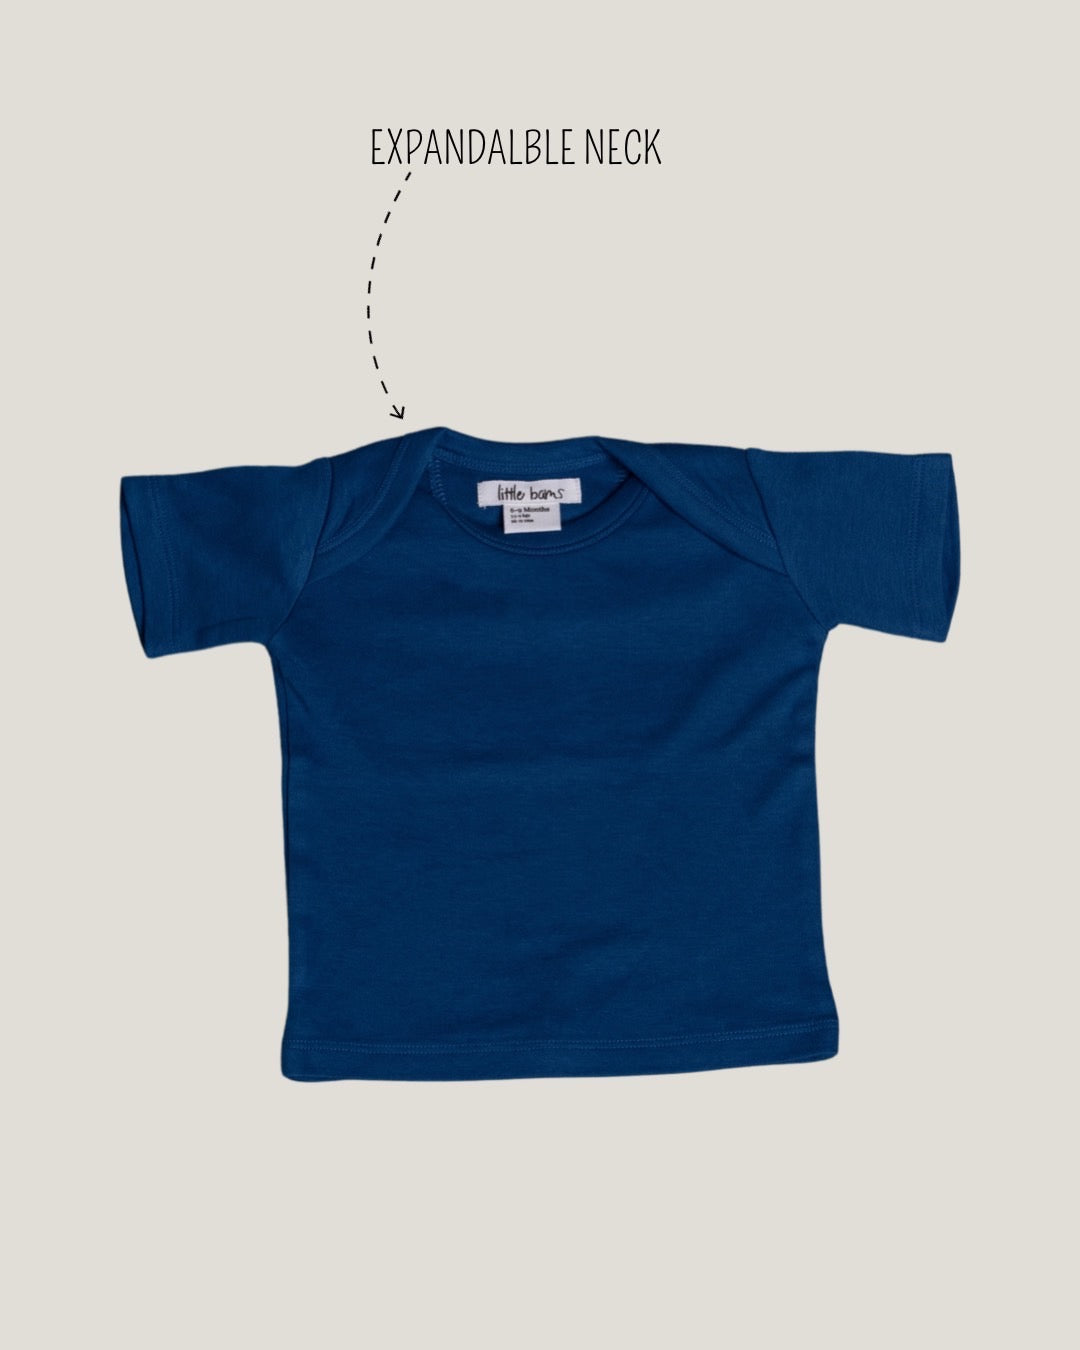 T-shirt in Classic Blue